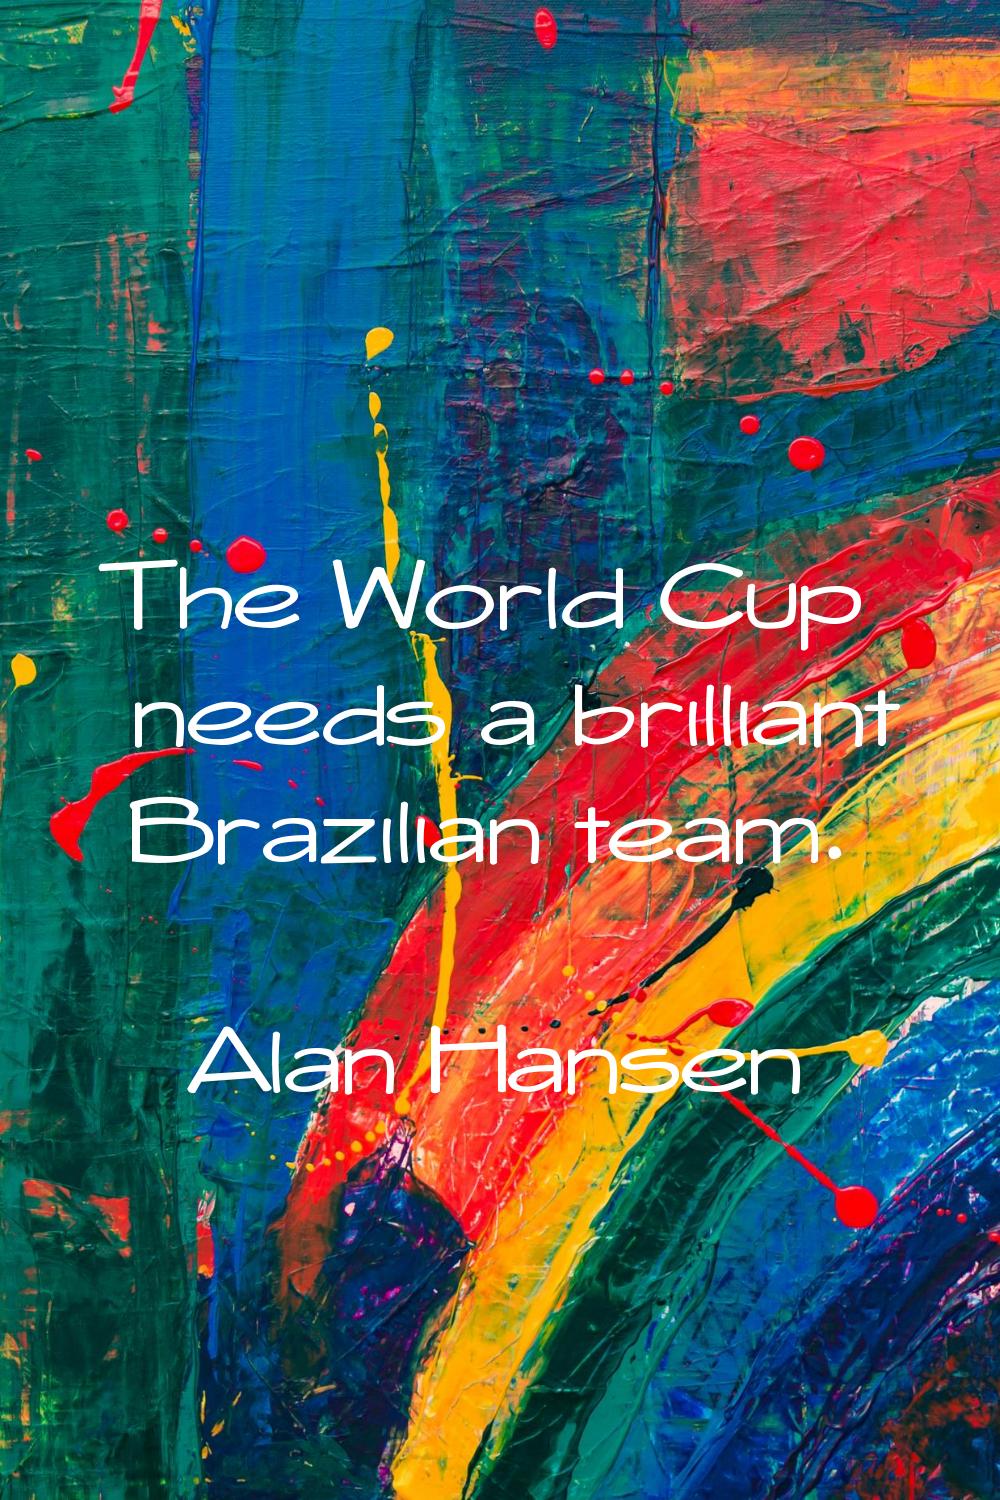 The World Cup needs a brilliant Brazilian team.